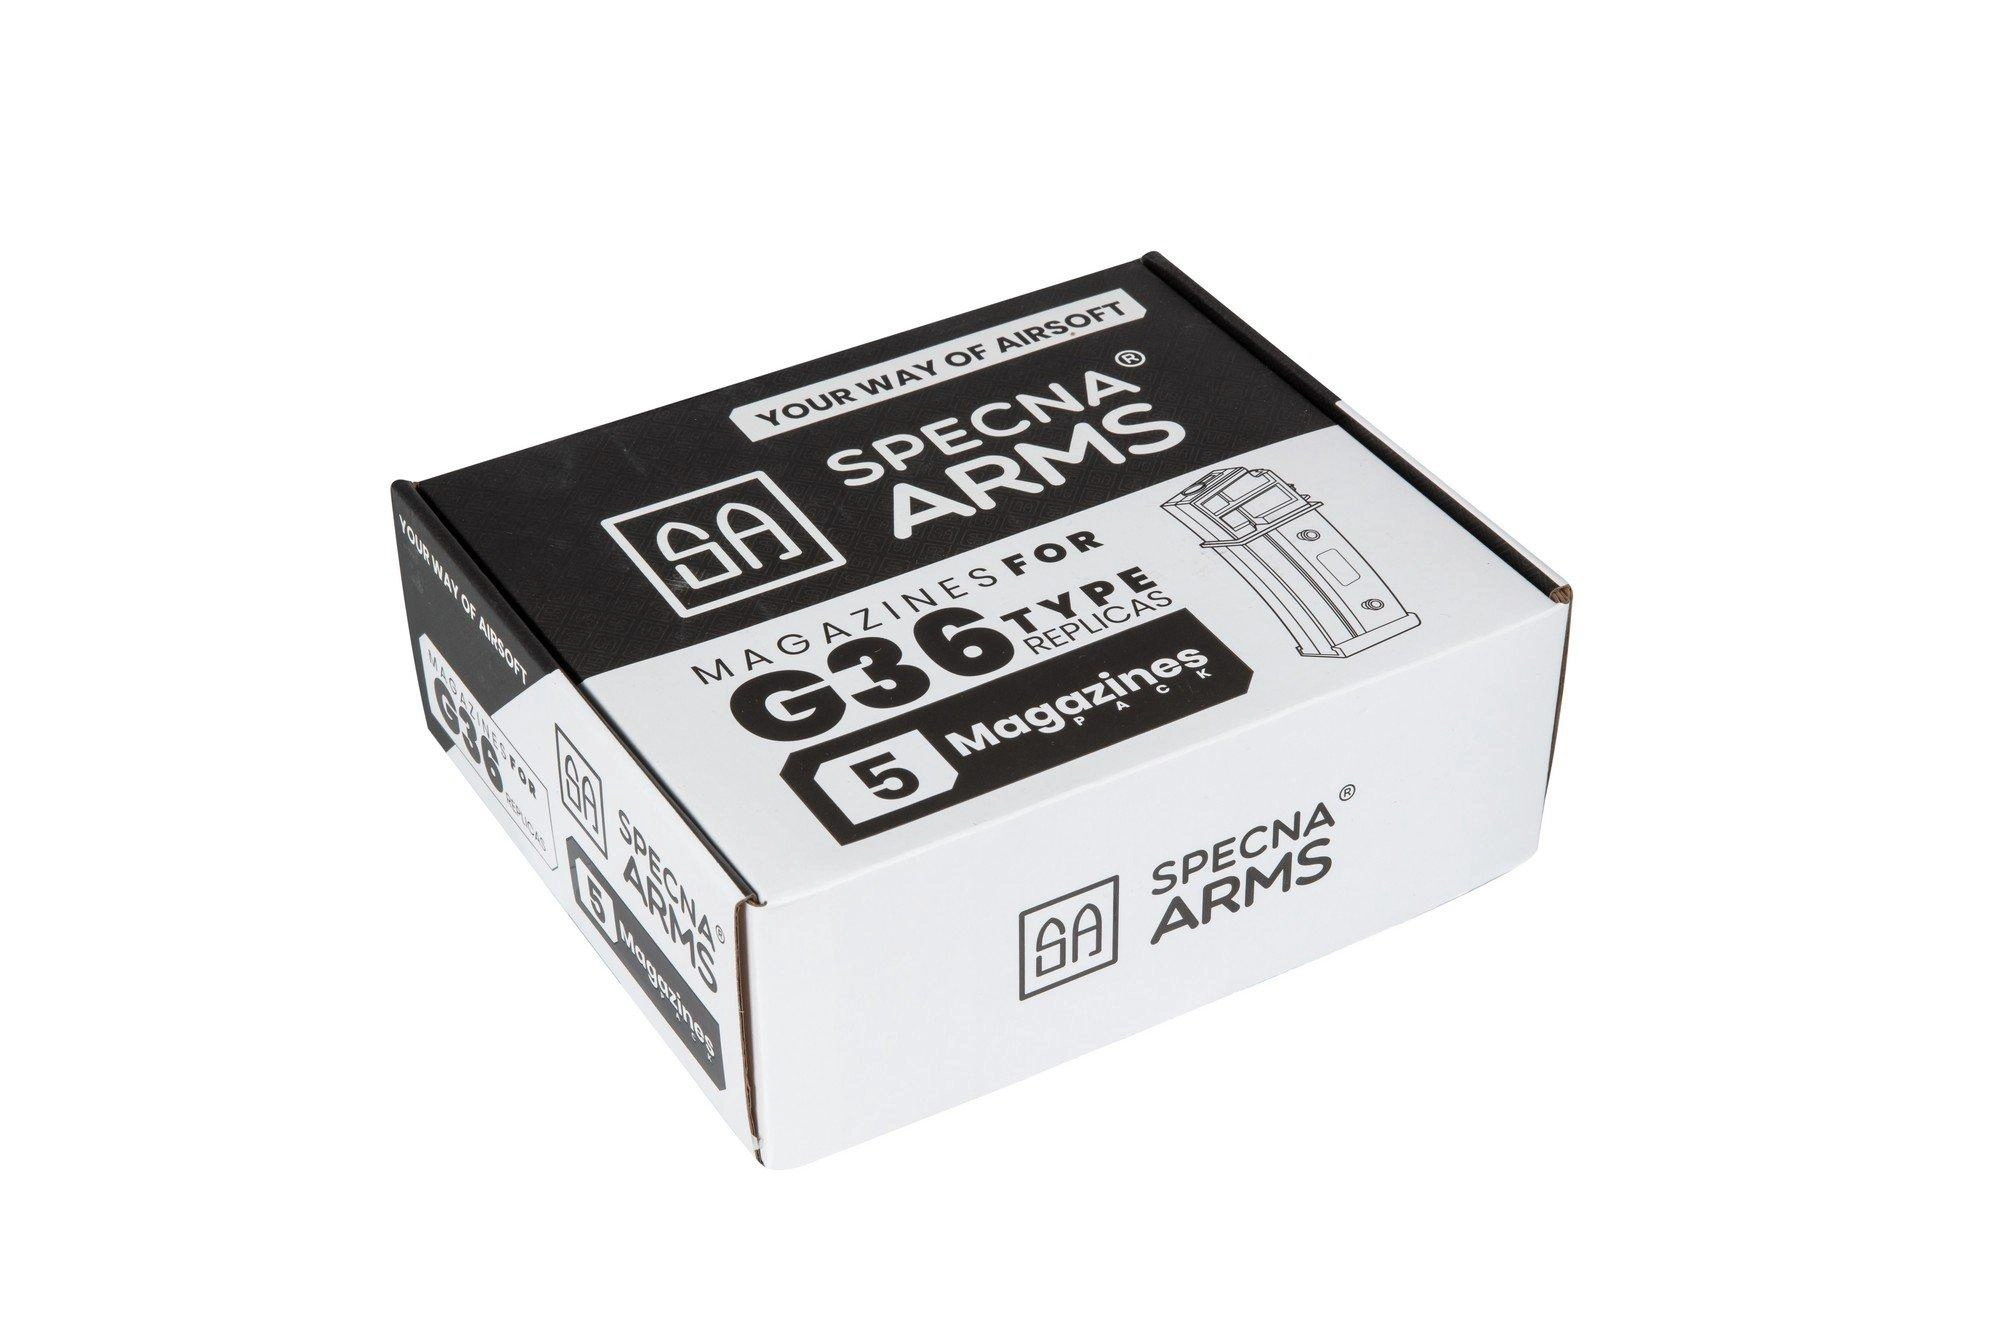 Specna Arms 5x G36 Hi-Cap lipaspaketti - musta